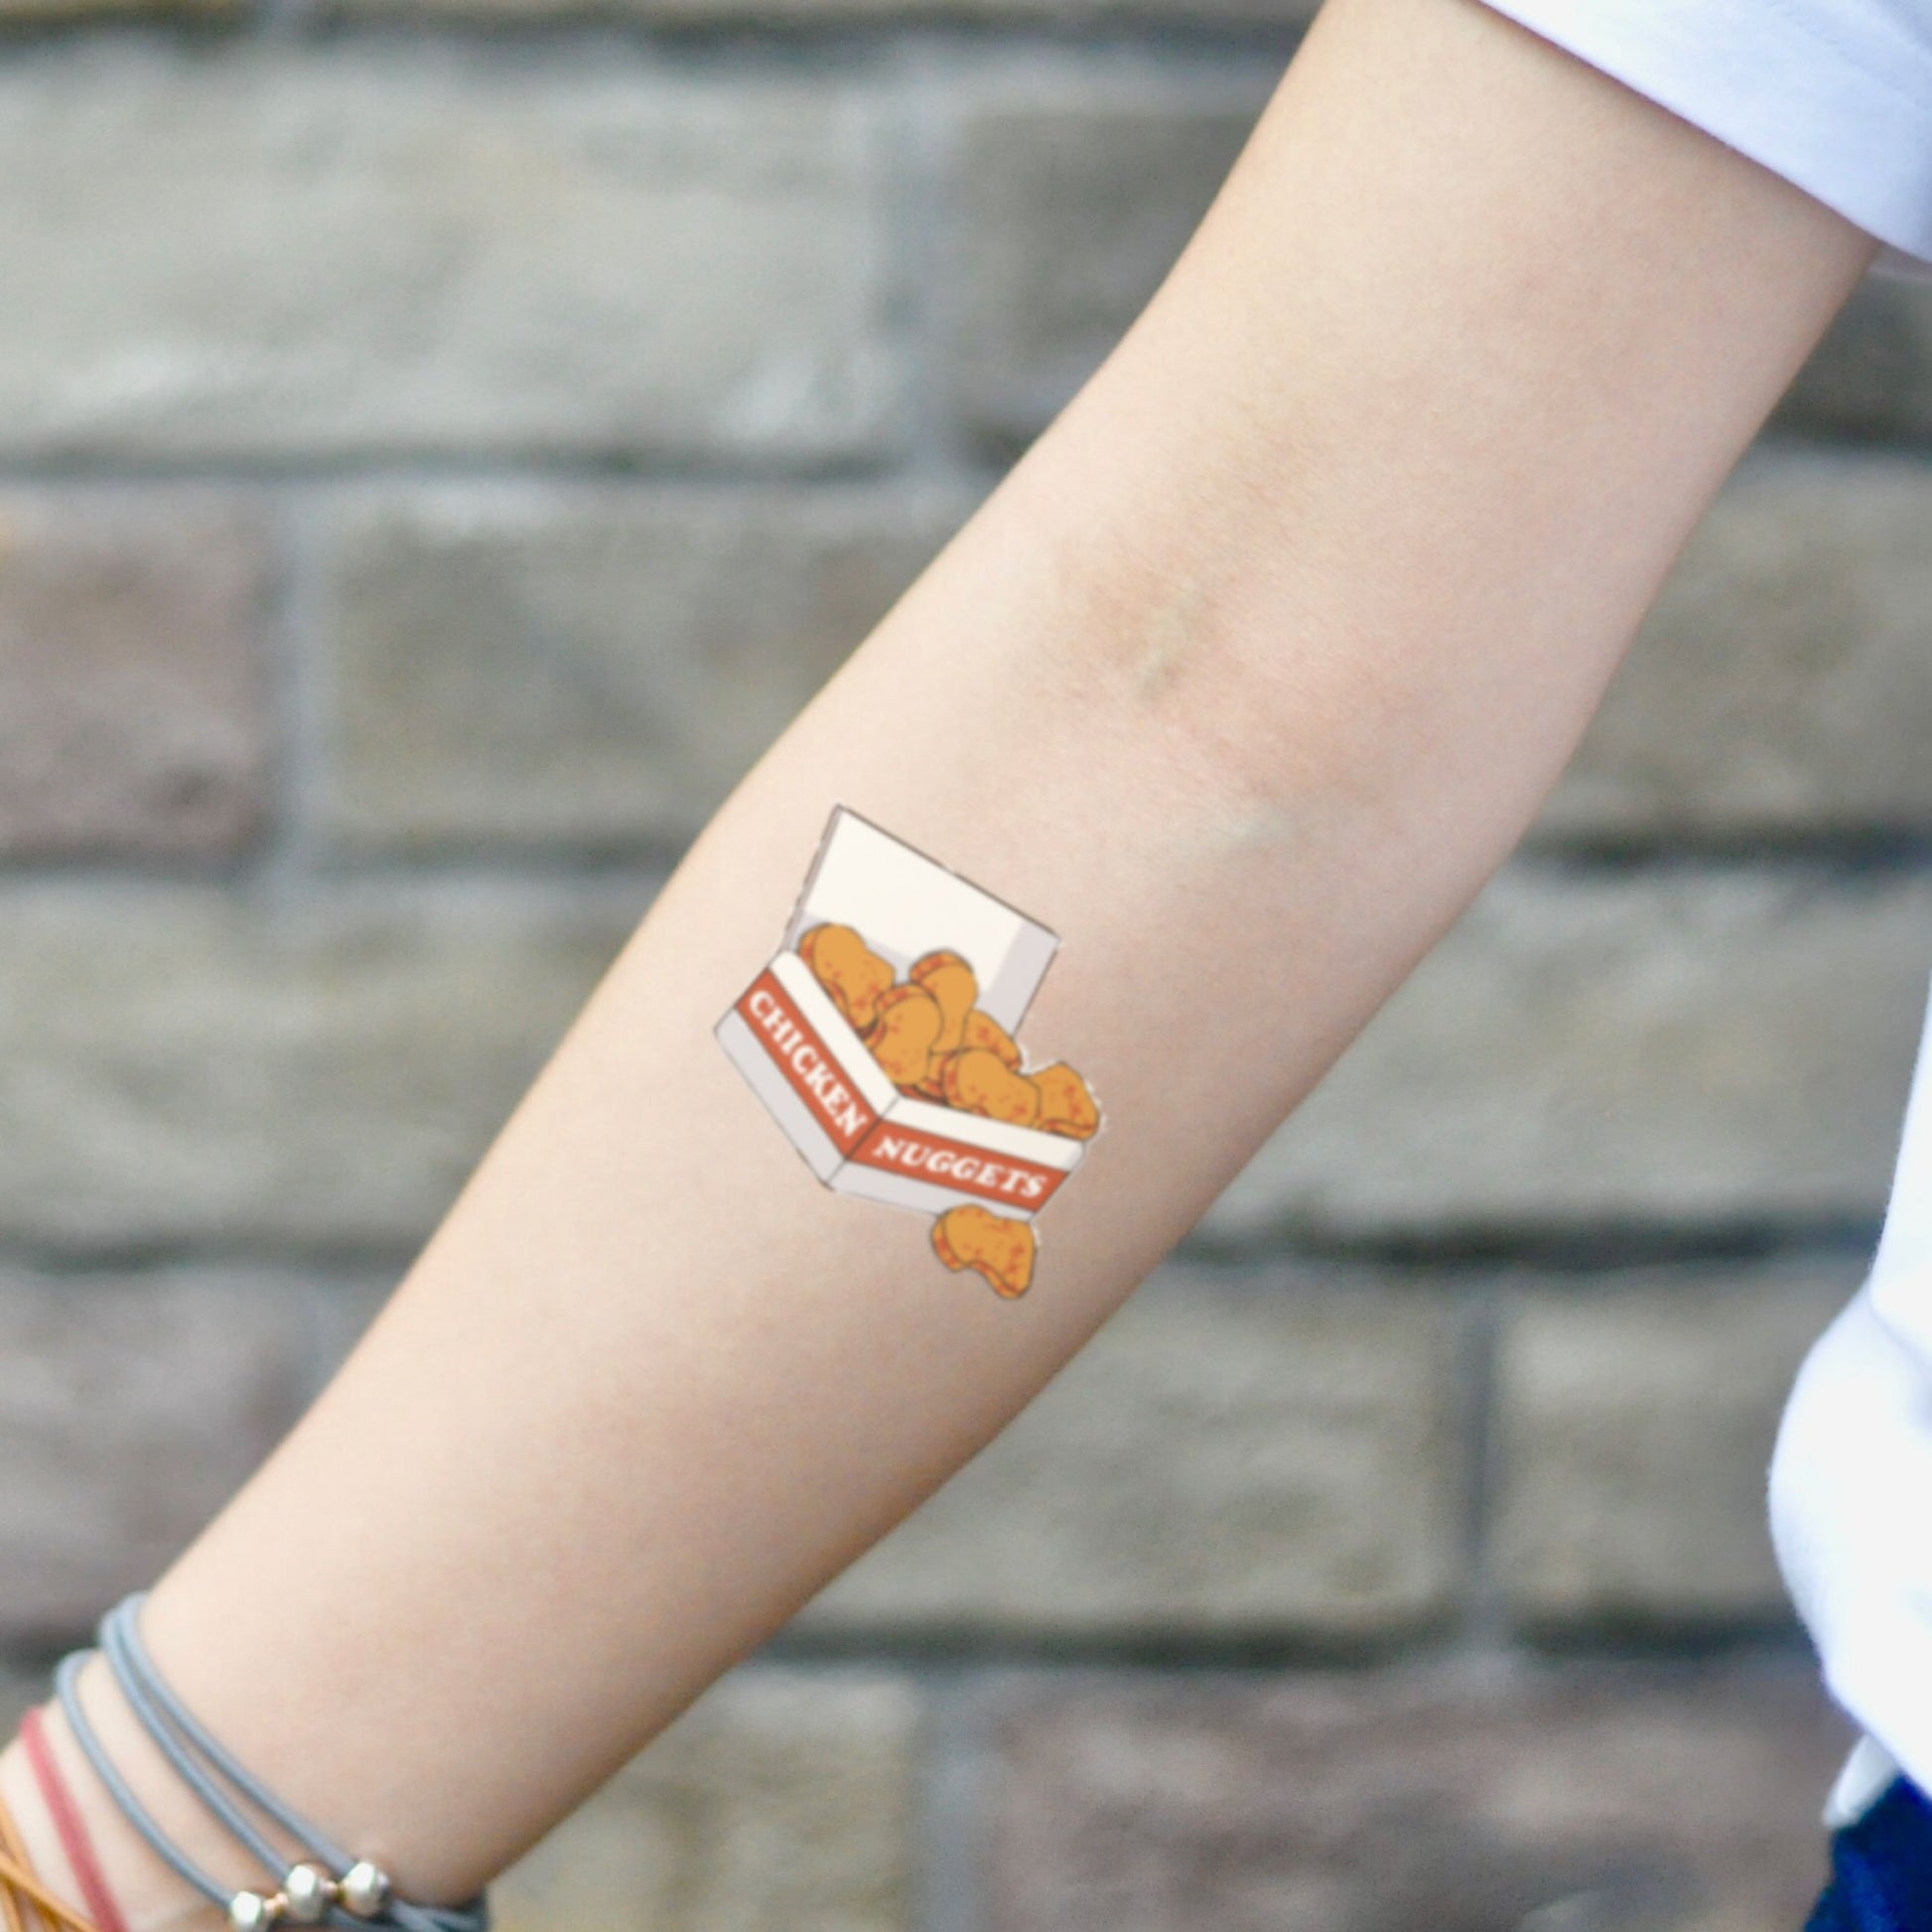 fake small chicken nugget food temporary tattoo sticker design idea on inner arm